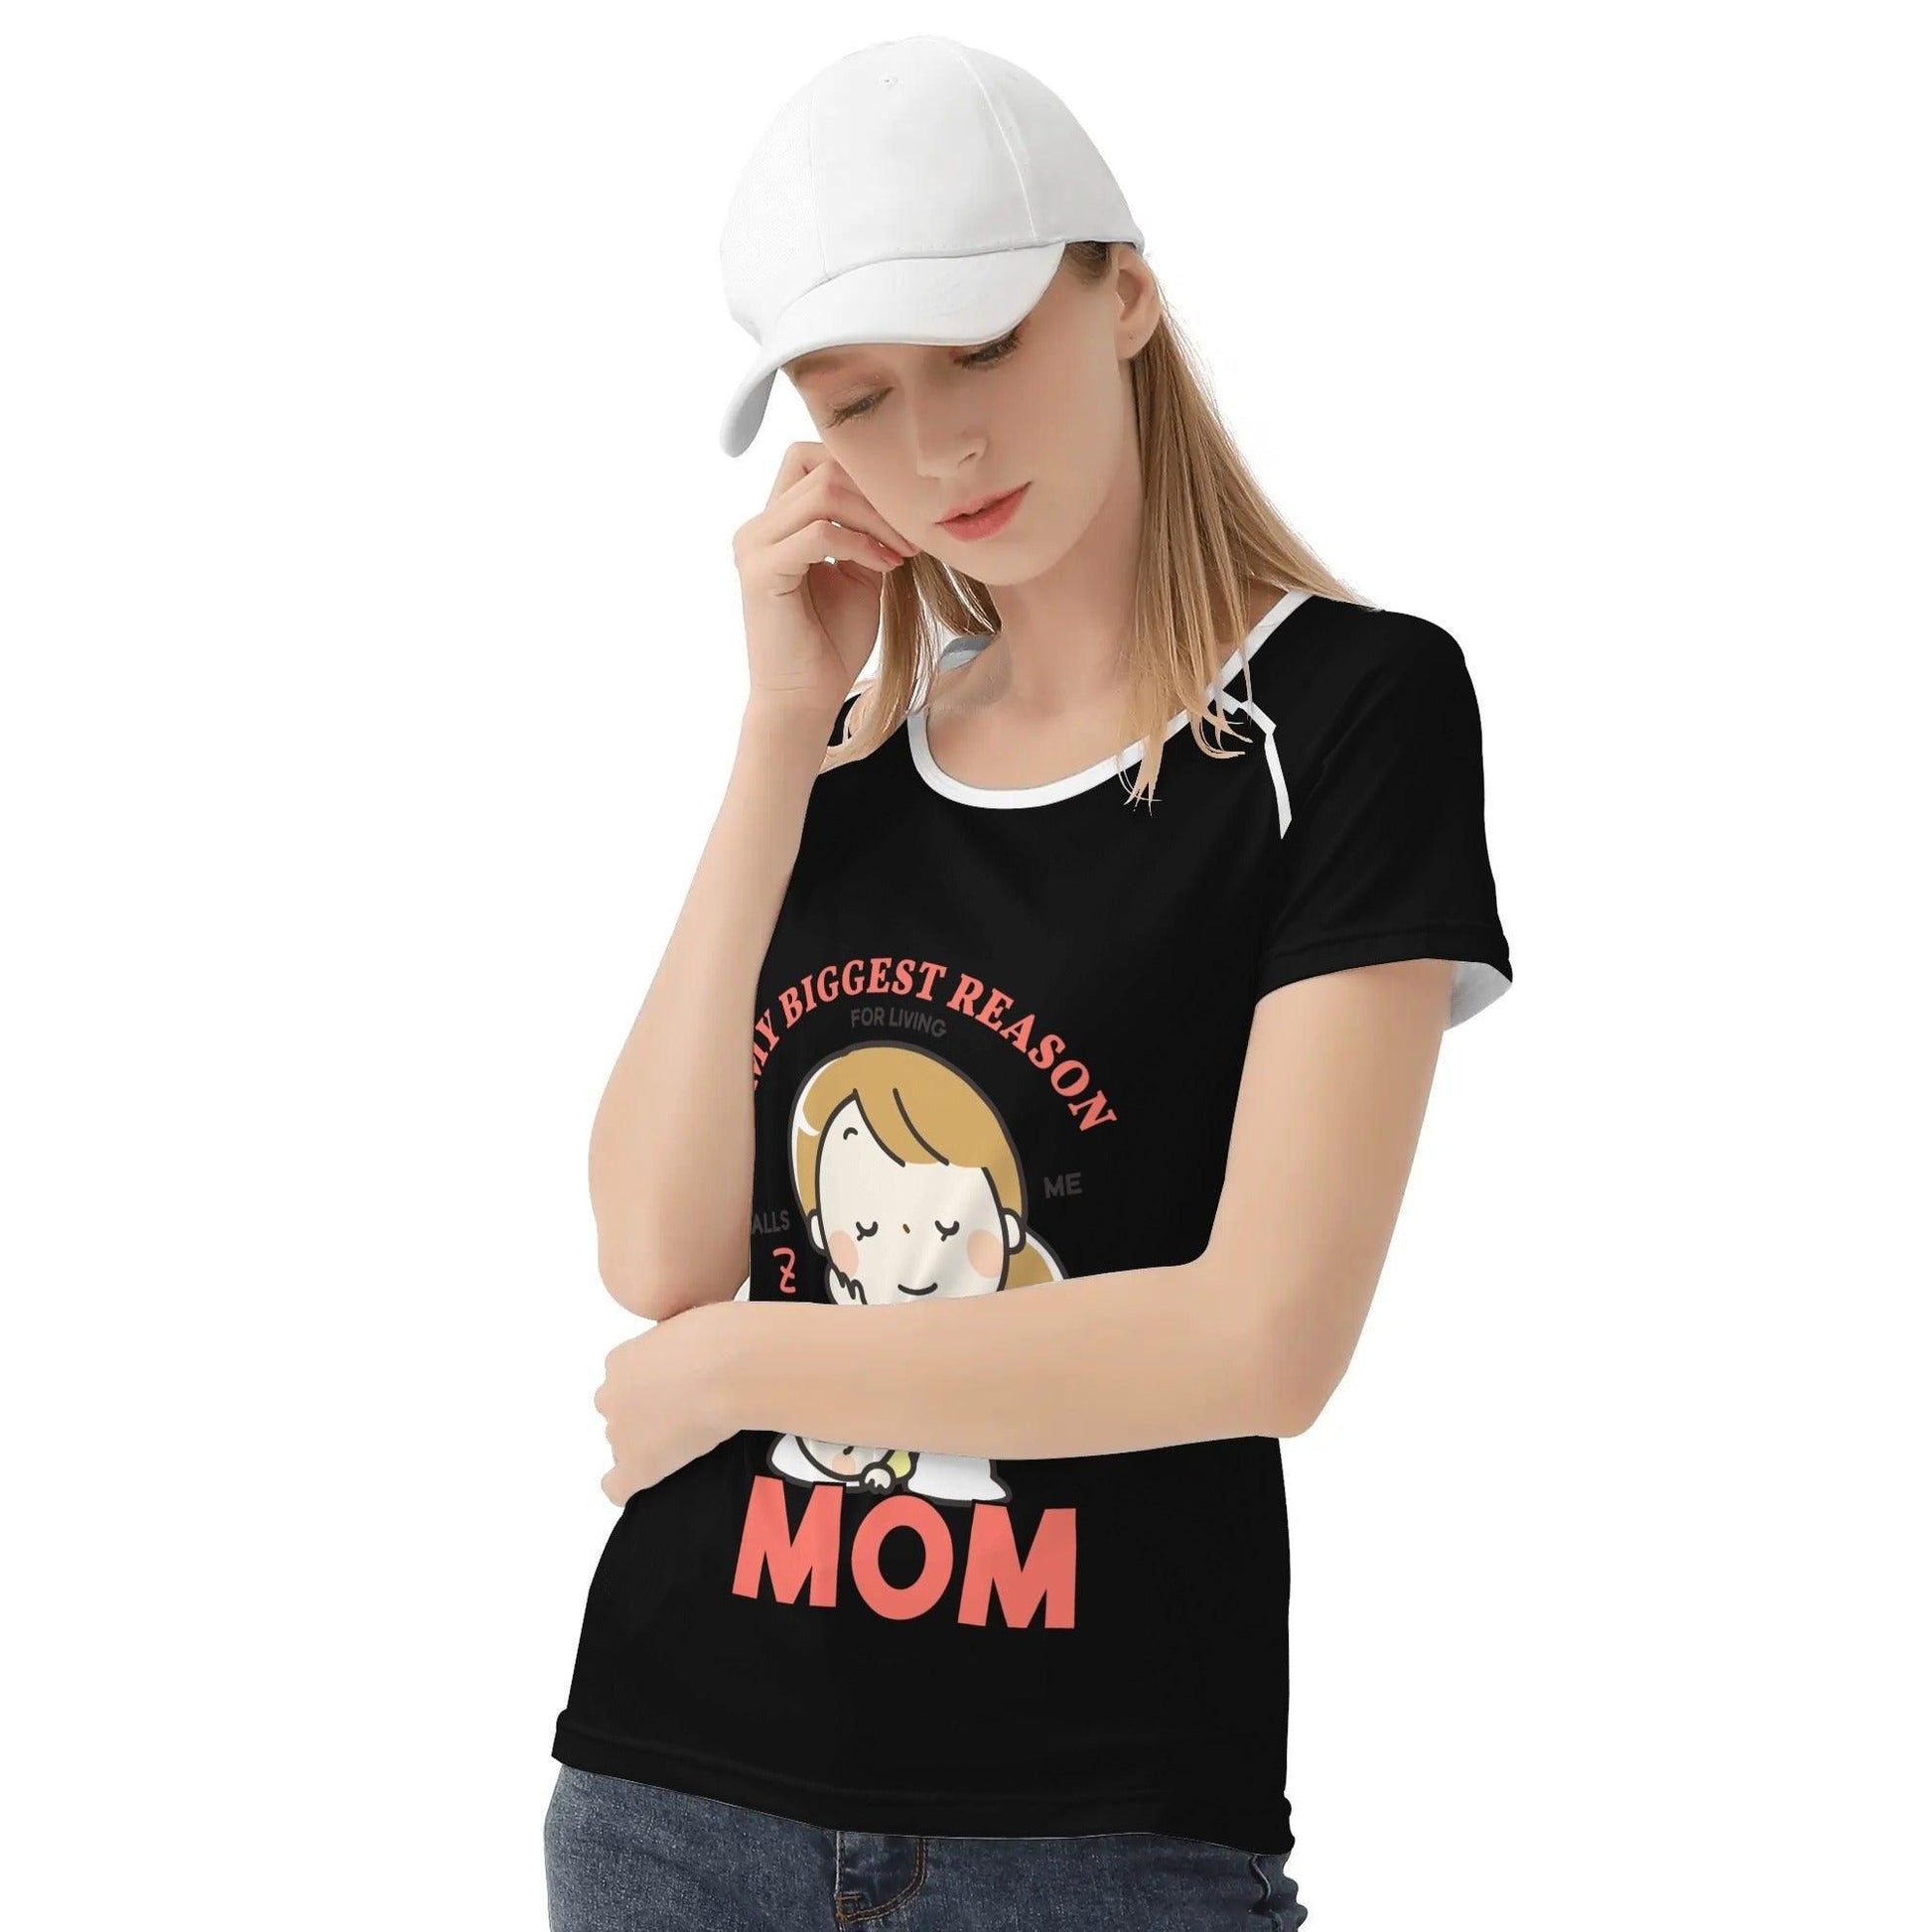 Momicorn womens t-shirt black - NX Vogue New York | Luxury Redefined